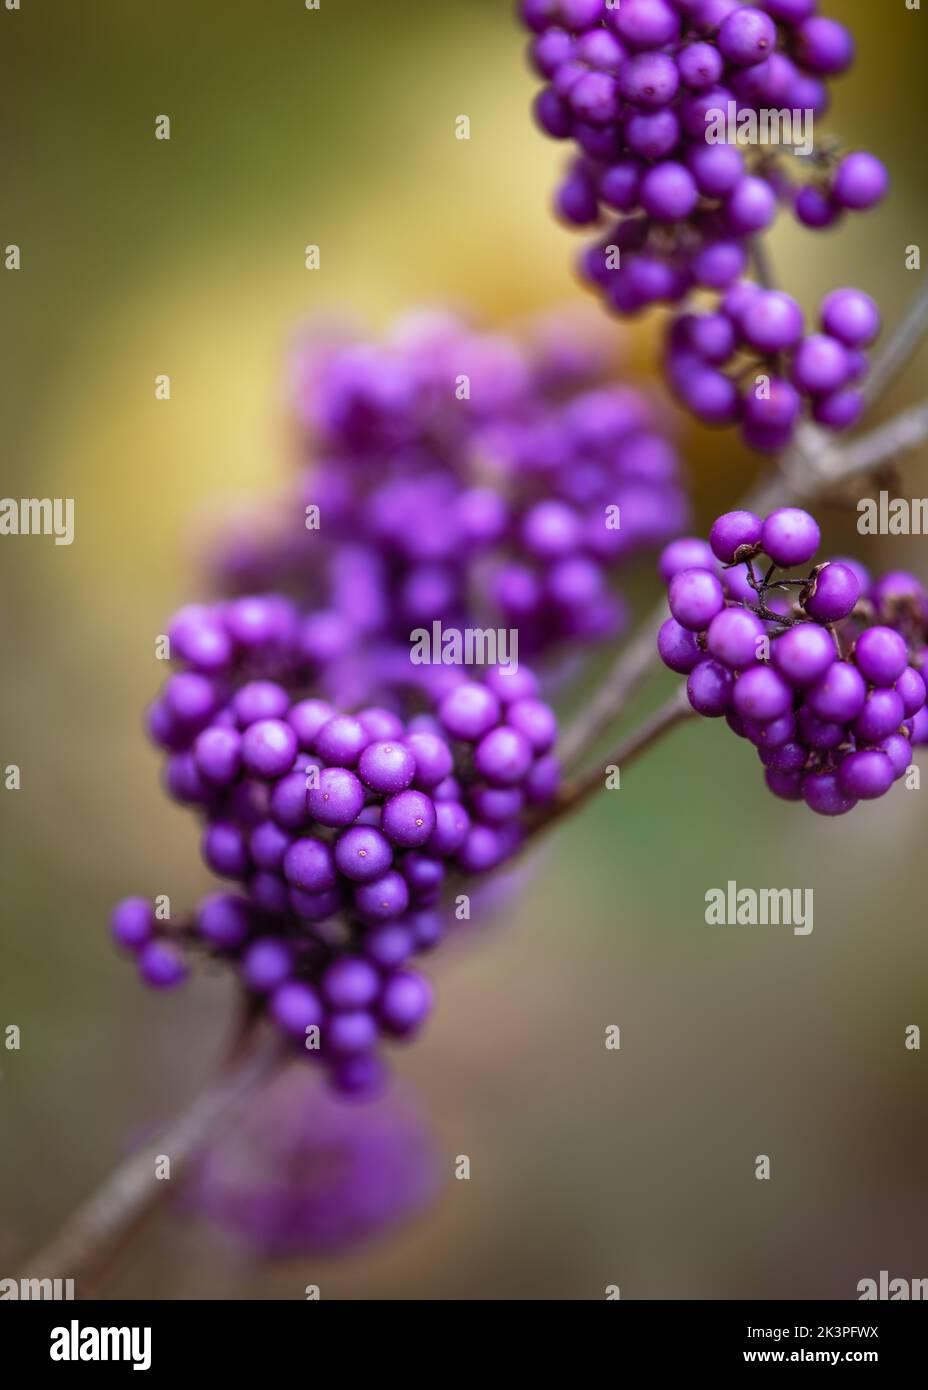 Plant with purple things that look like berries. Germany : r/whatsthisplant